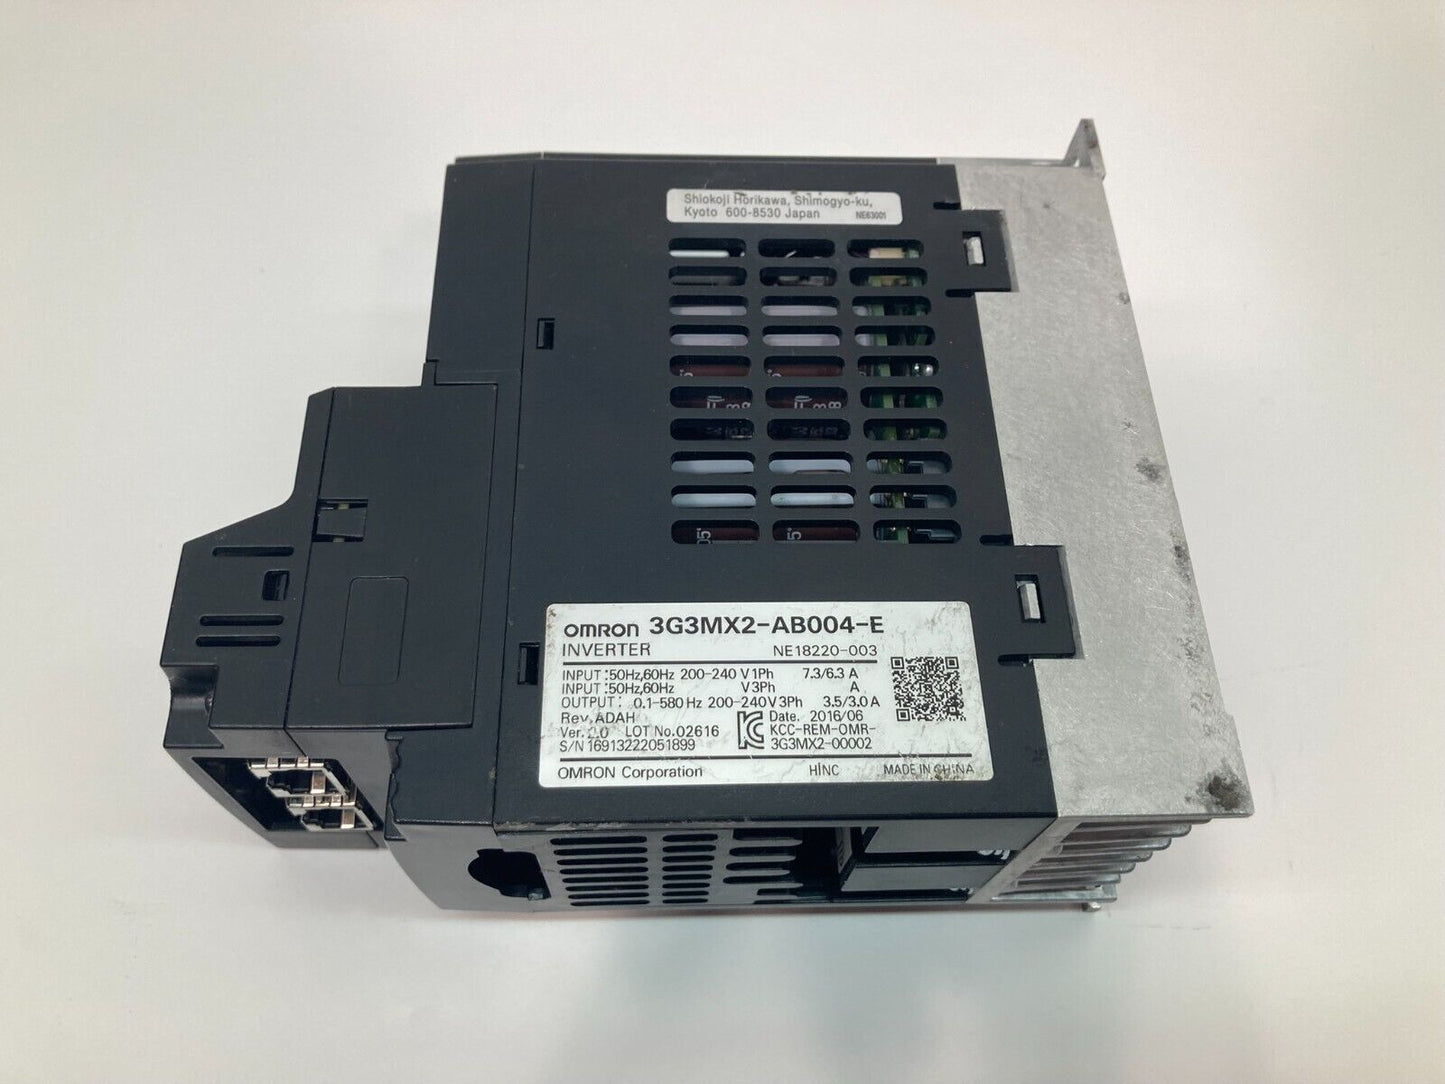 Omron 3G3MX2-AB004-E Inverter